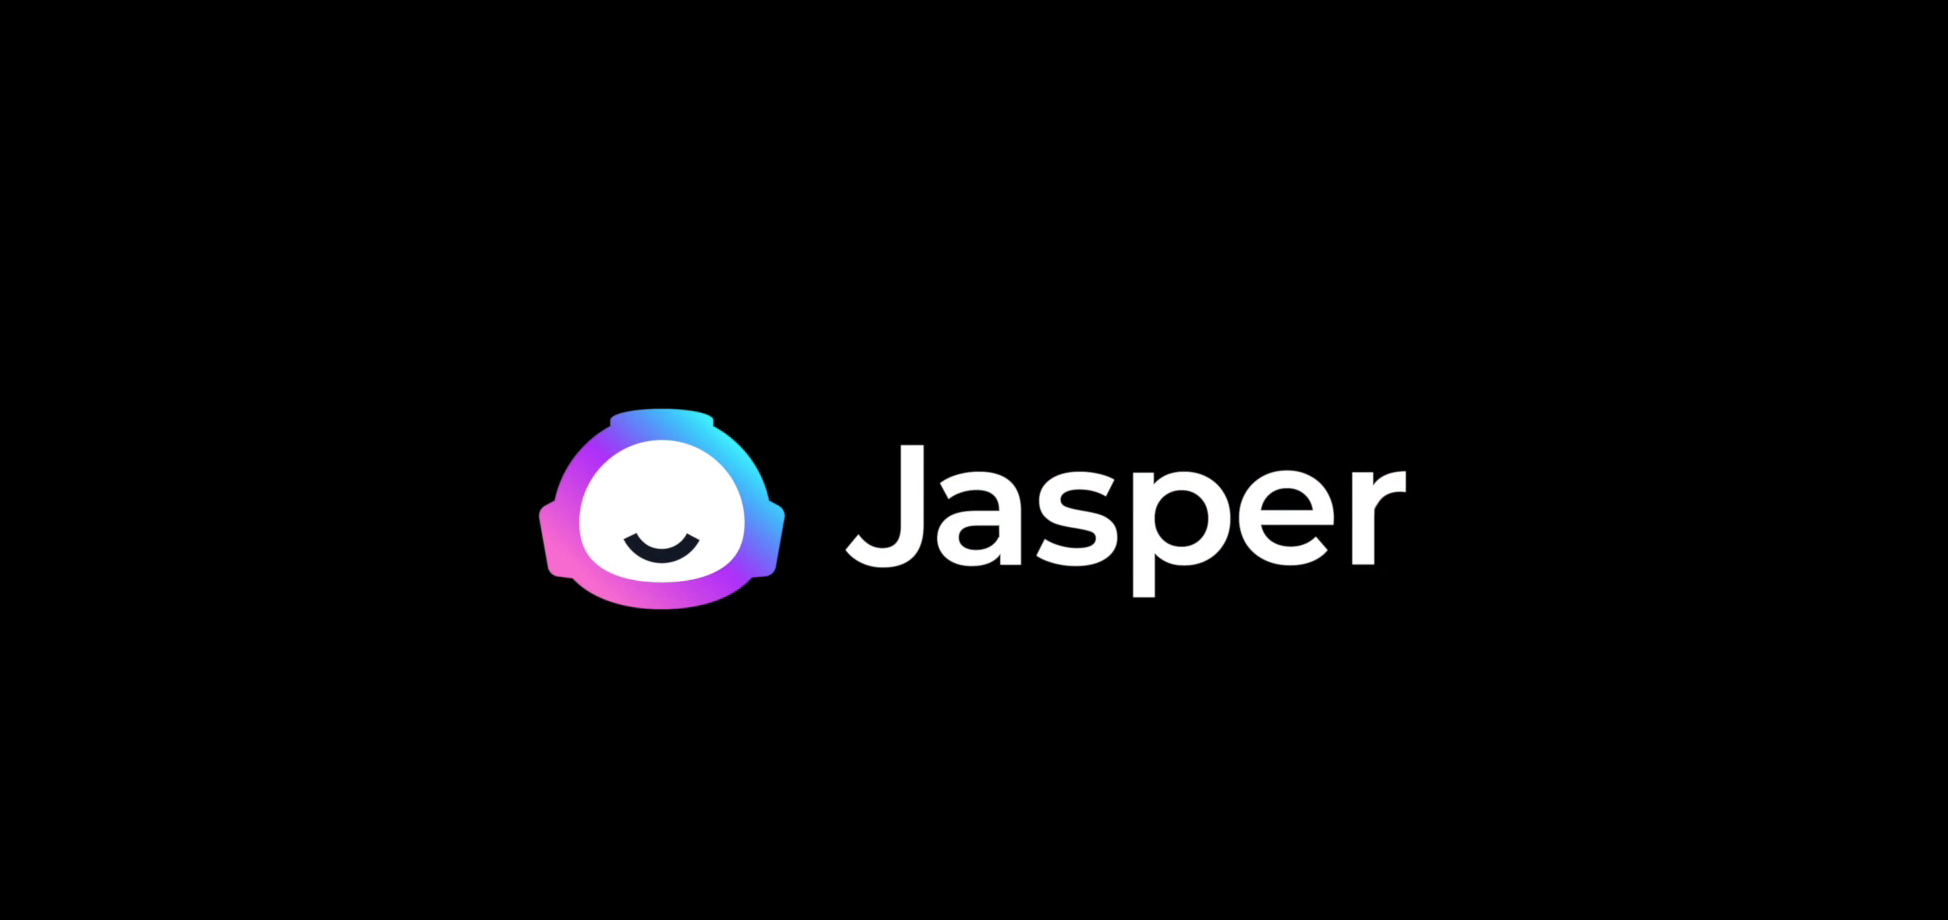 Jasper Commands: The Complete List